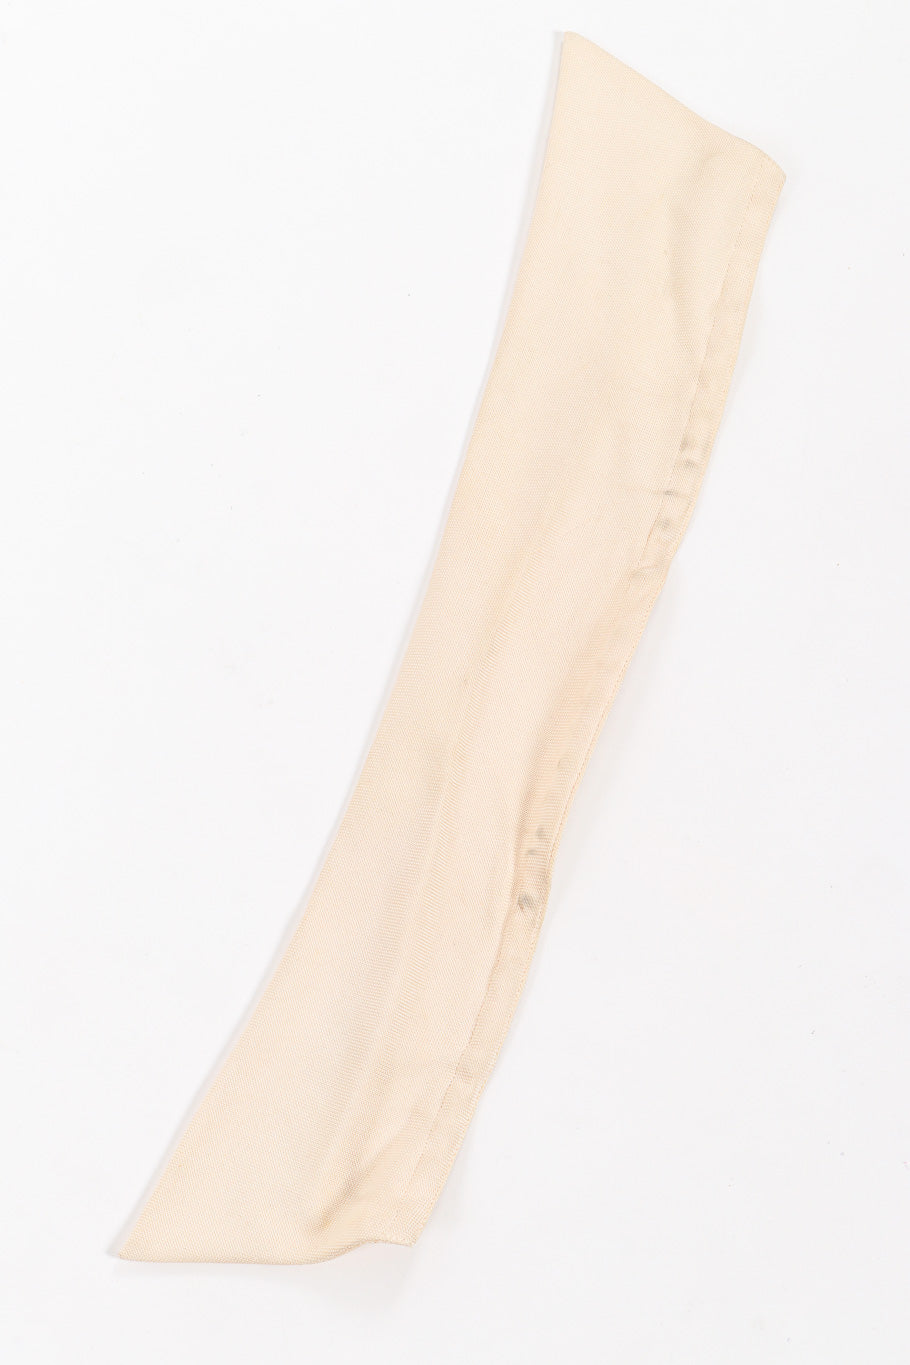 Vintage Yves Saint Laurent Collared Blazer Dress full view of collar and marks near hem @Recessla